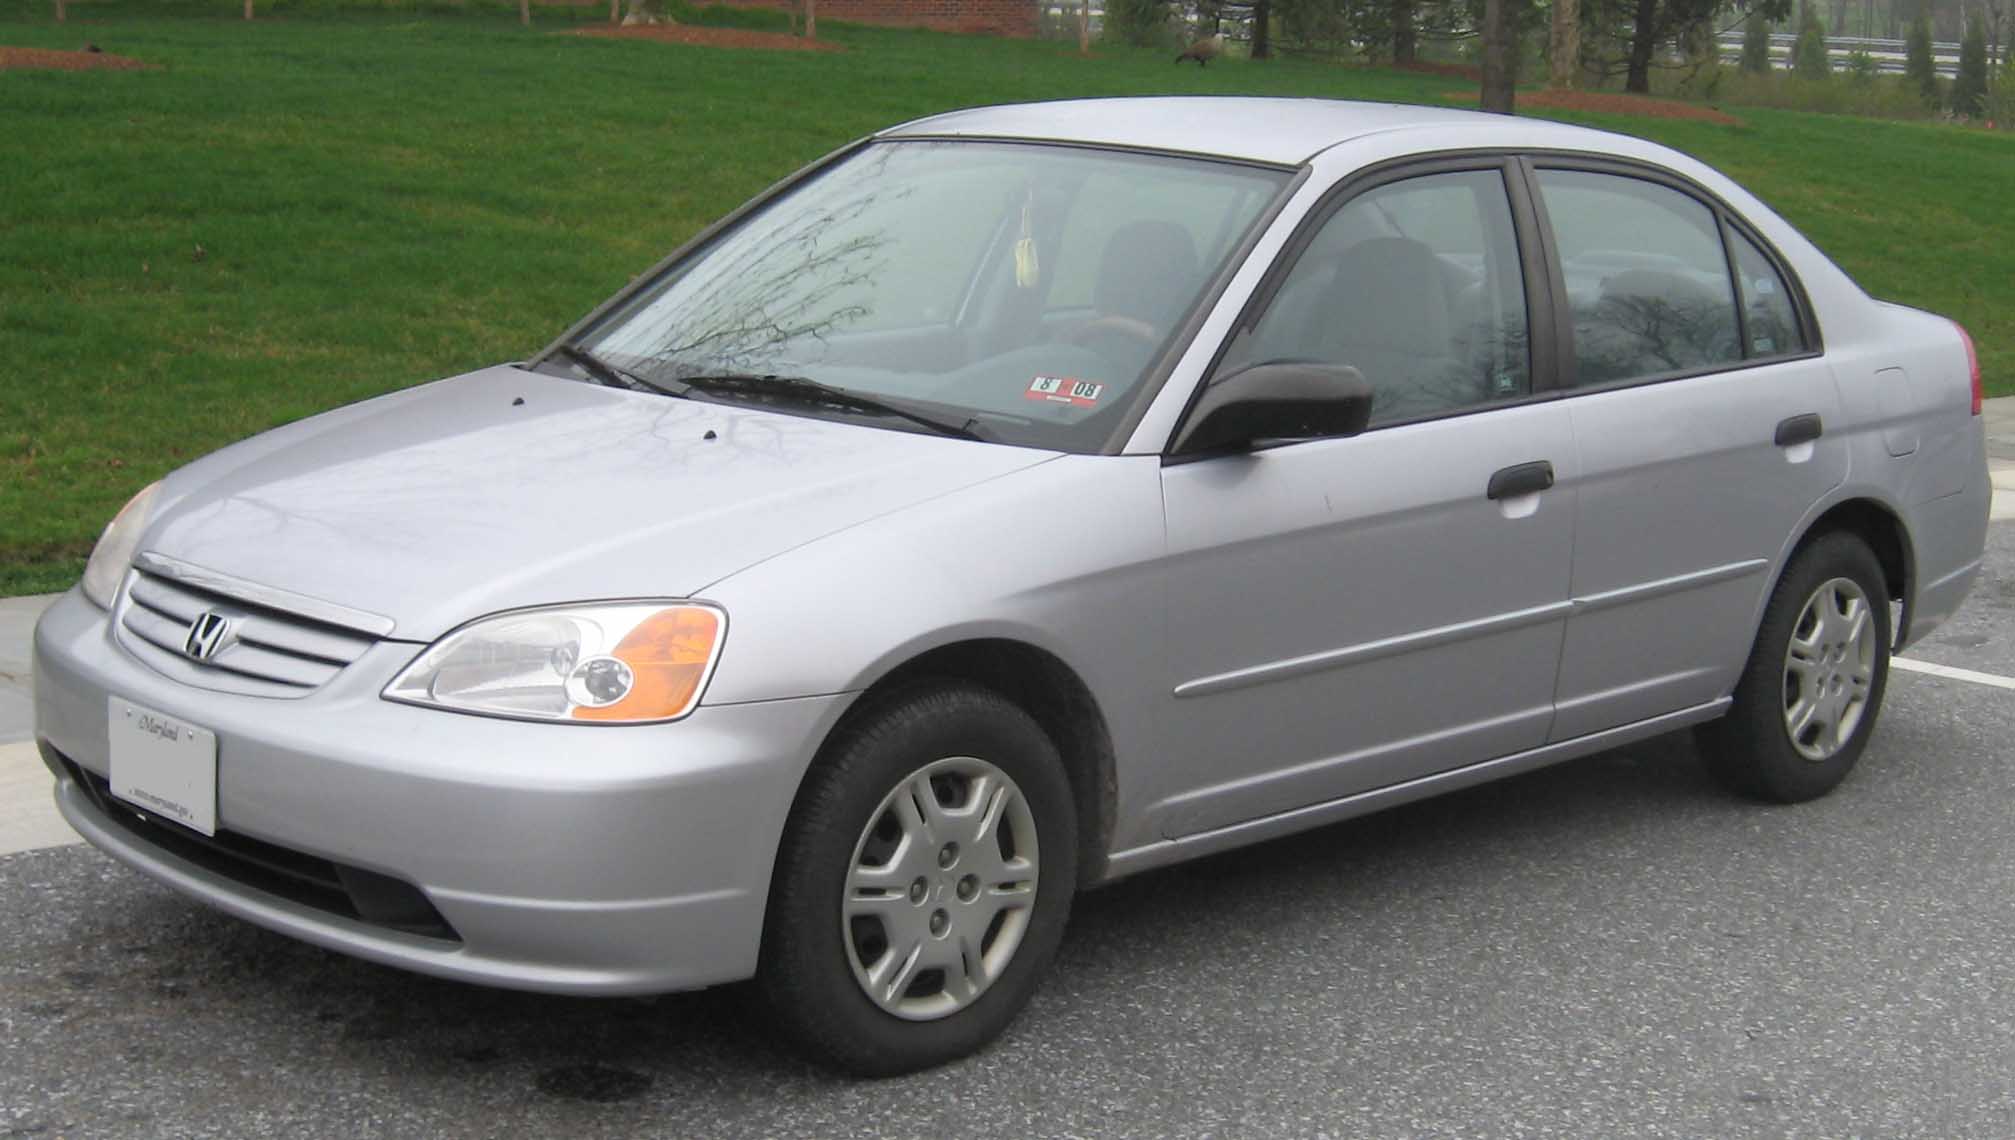 Honda Civic Exterior Front View